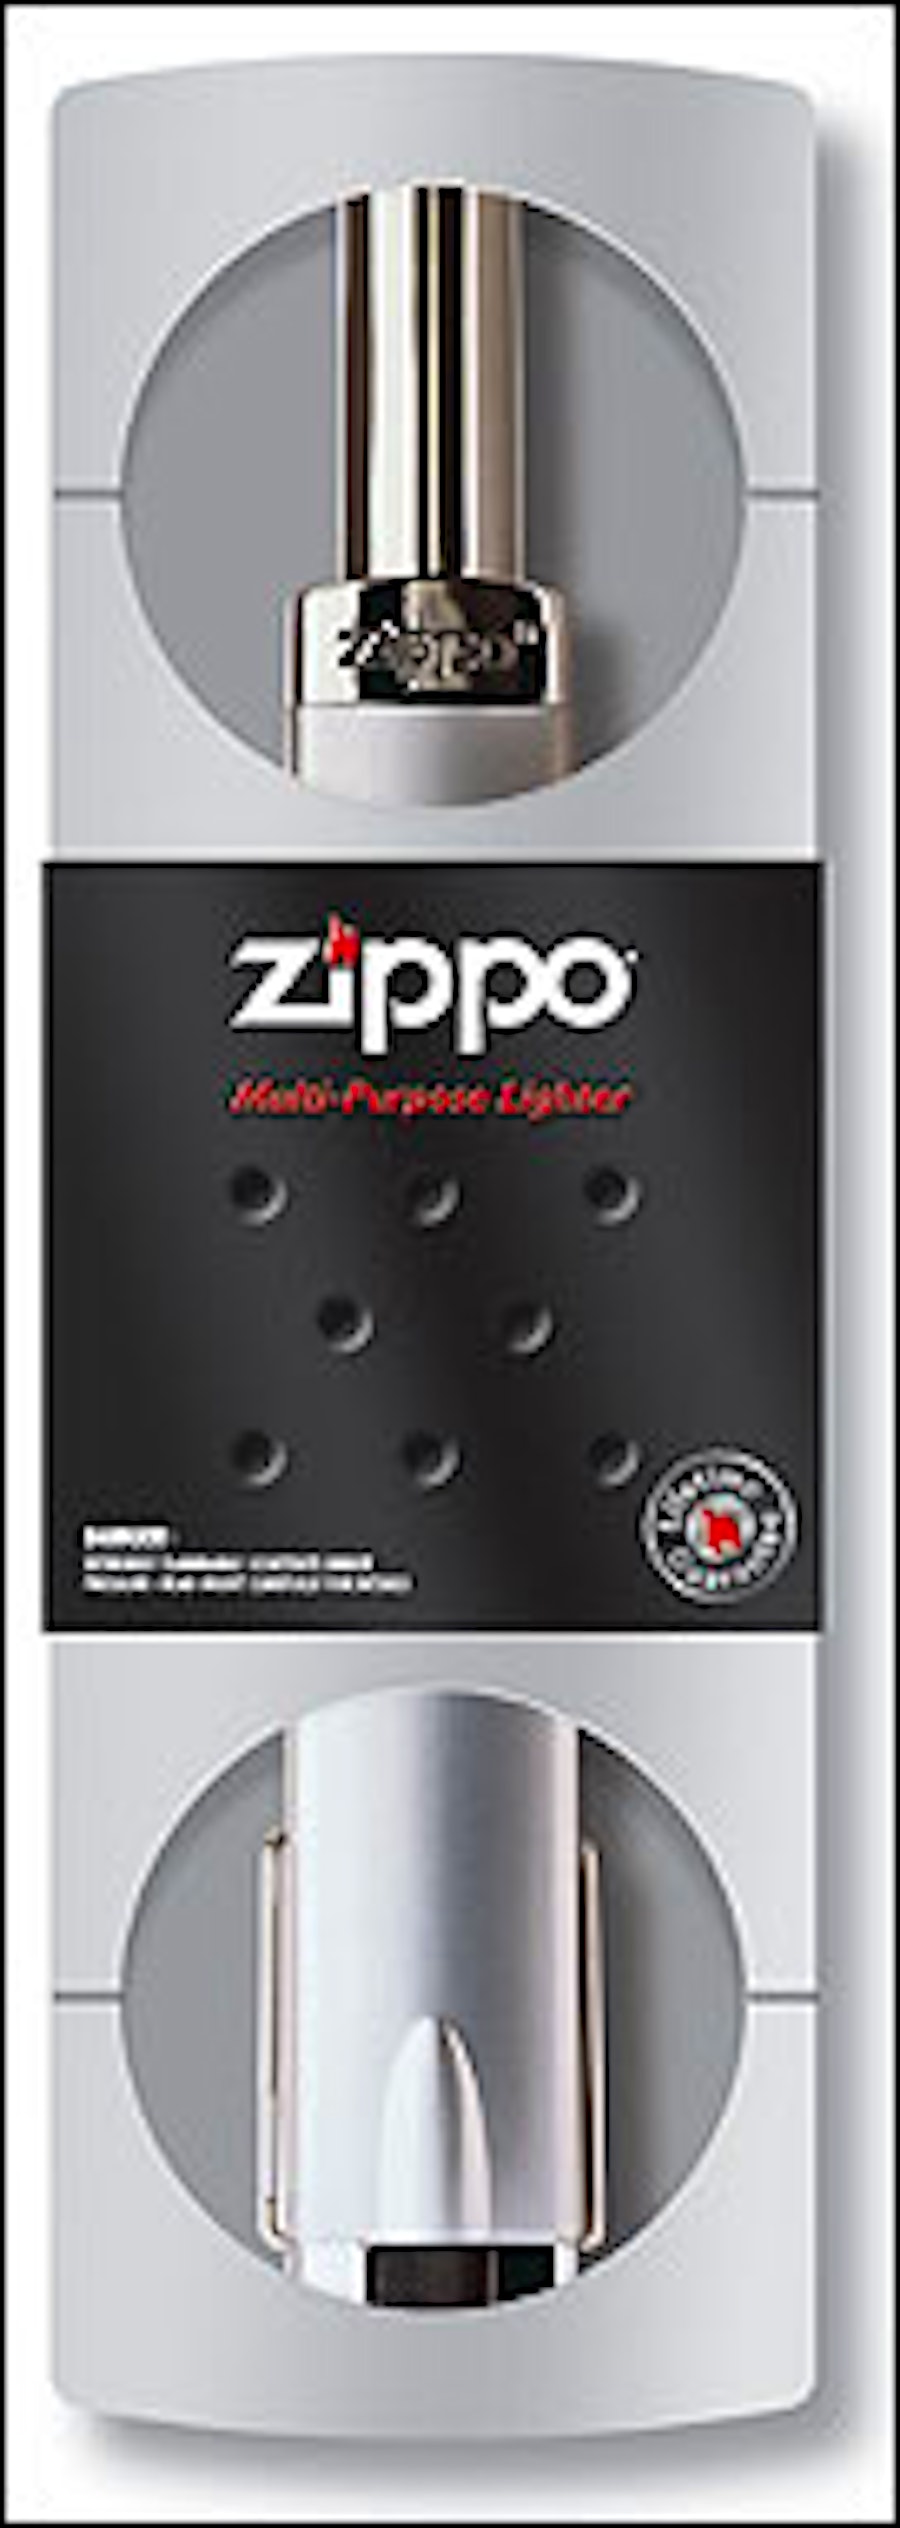 Zippo Original Gas Tank. Fluid ignition Zippo lighters